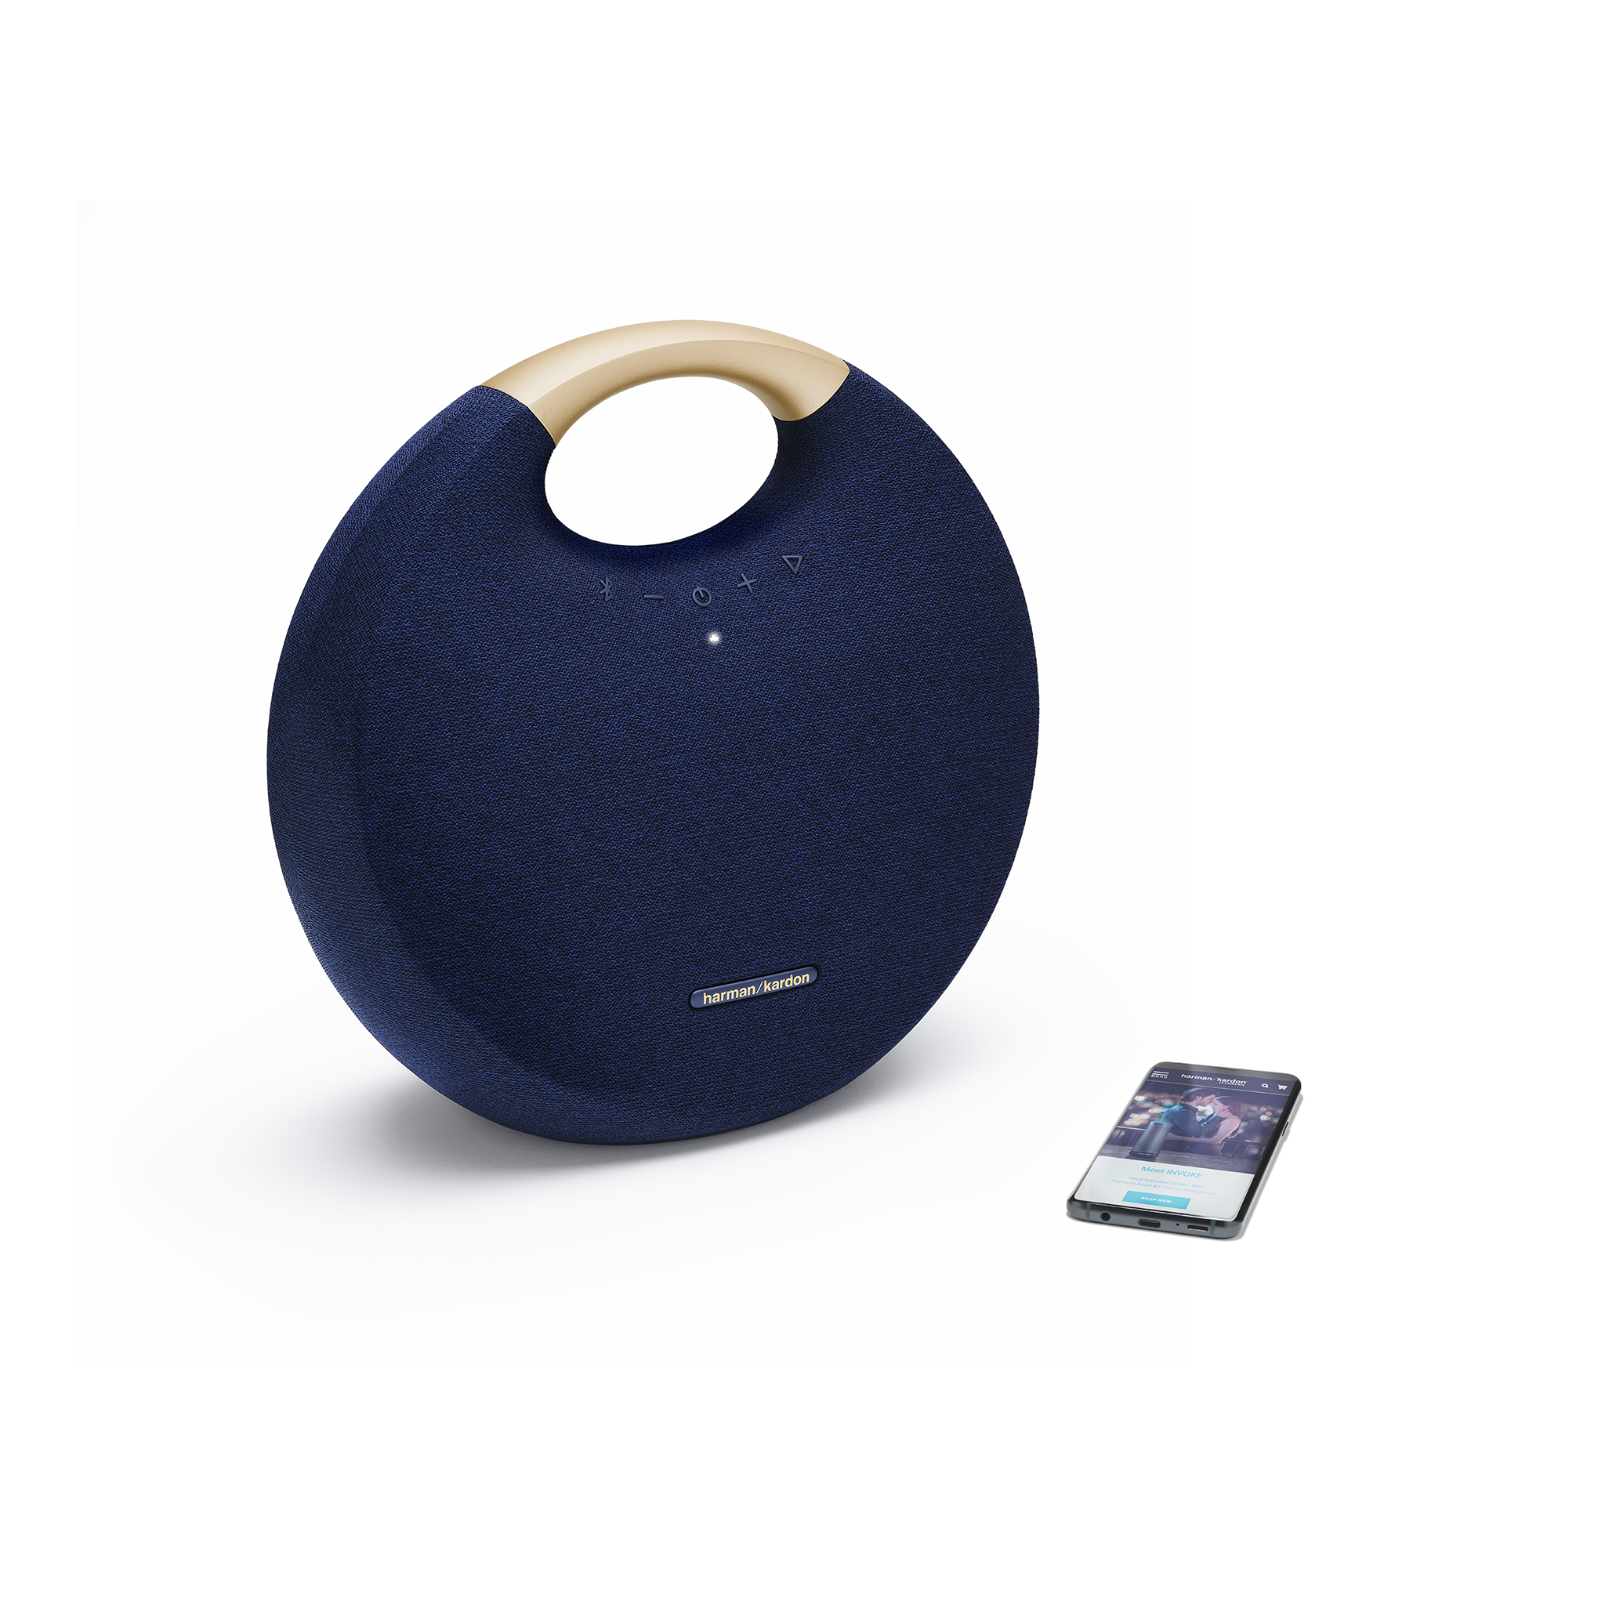 Onyx Studio 6 - Blue - Portable Bluetooth speaker - Detailshot 1